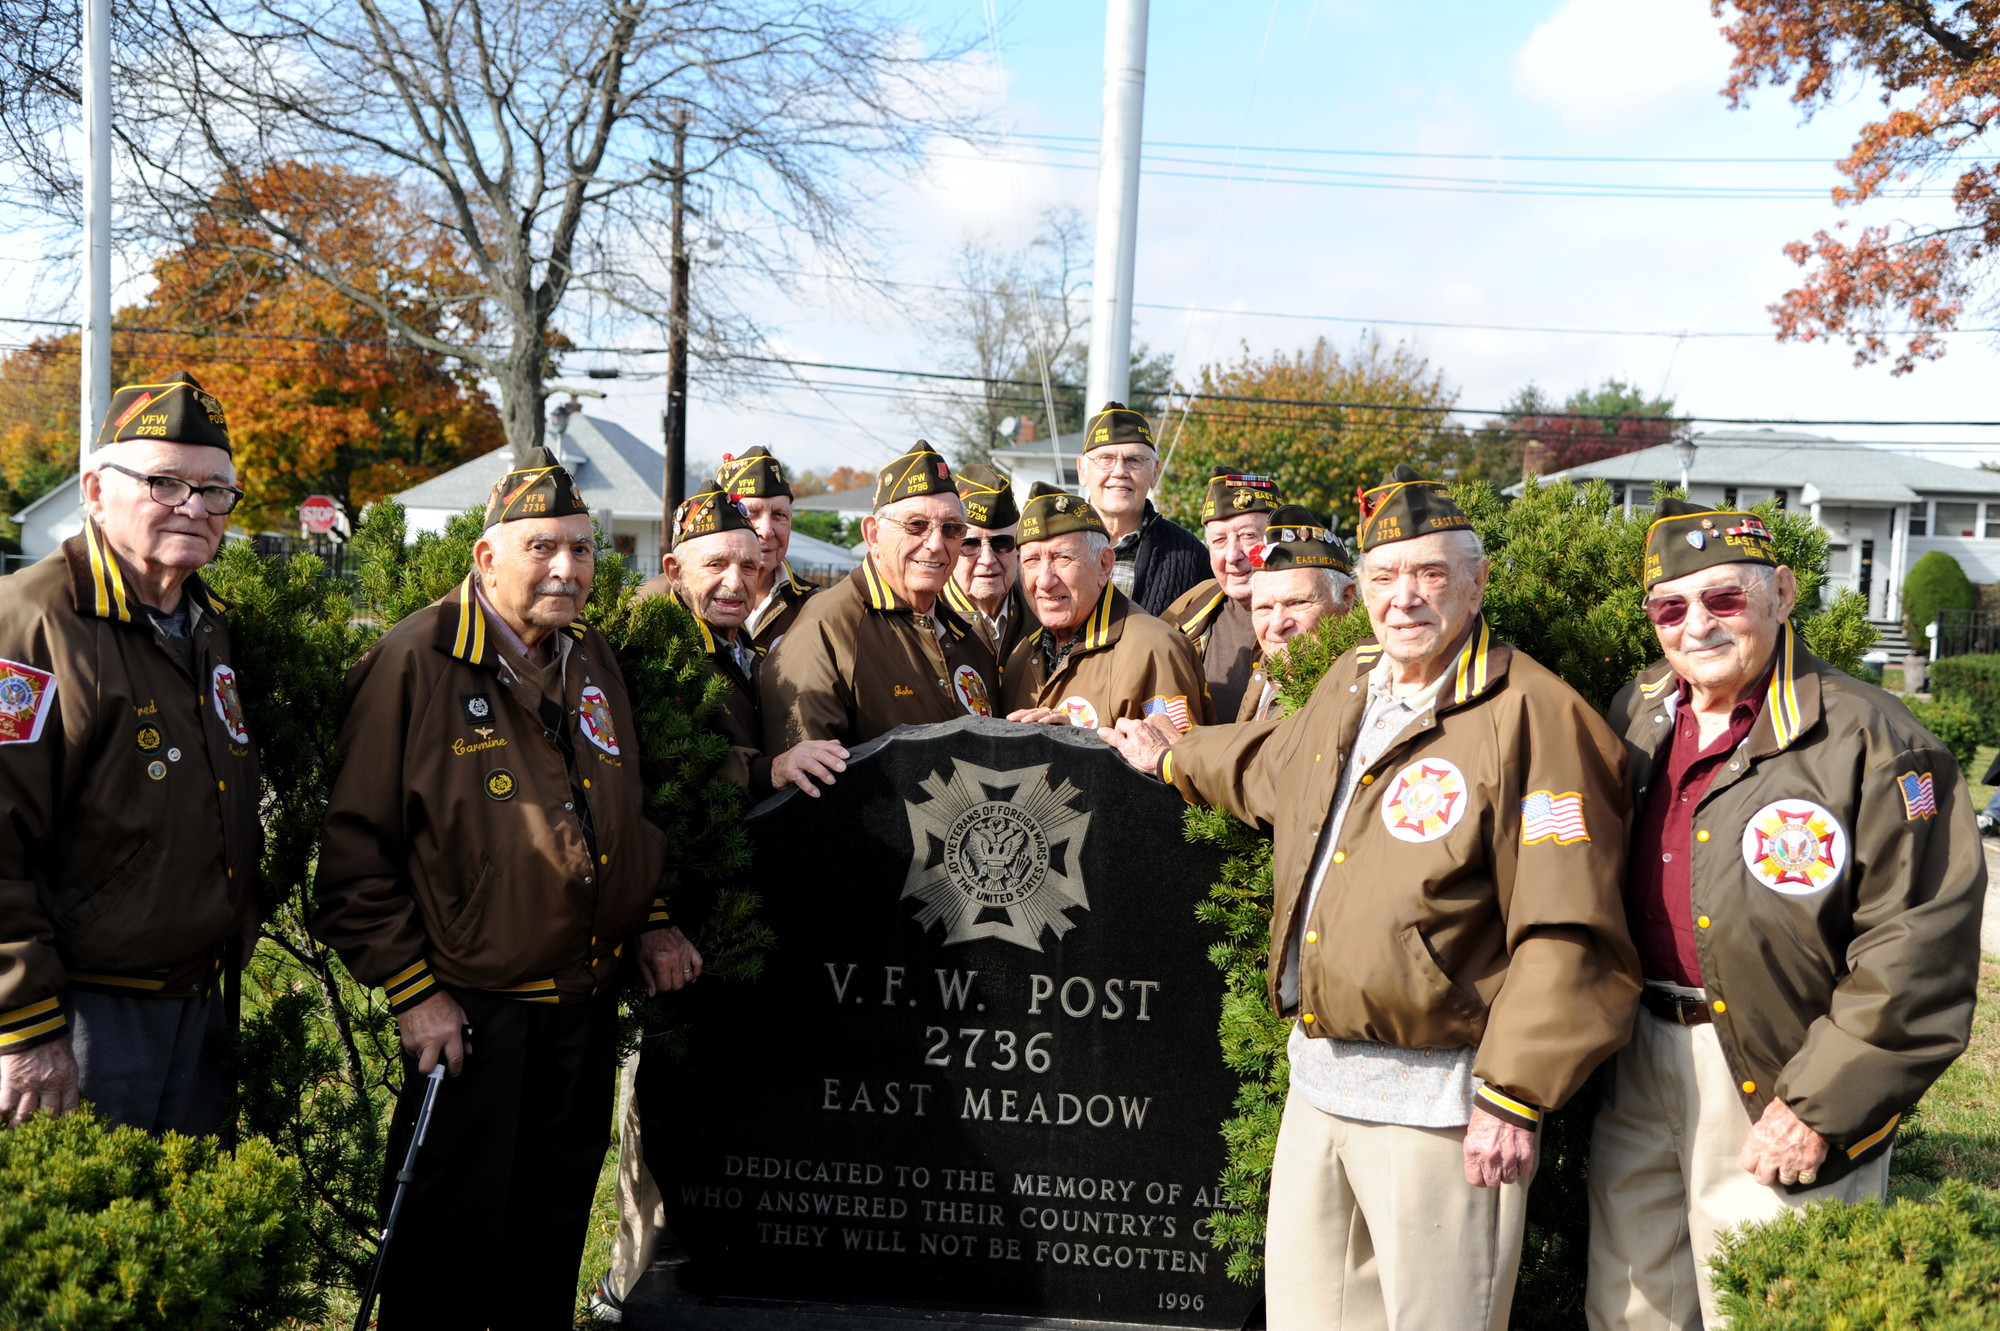 Members of the Veterans of Foreign Wars Post 2736 met at their statue at Veterans Memorial Park last year to commemorate Veterans Day. The  veterans will meet there again on Nov. 11.